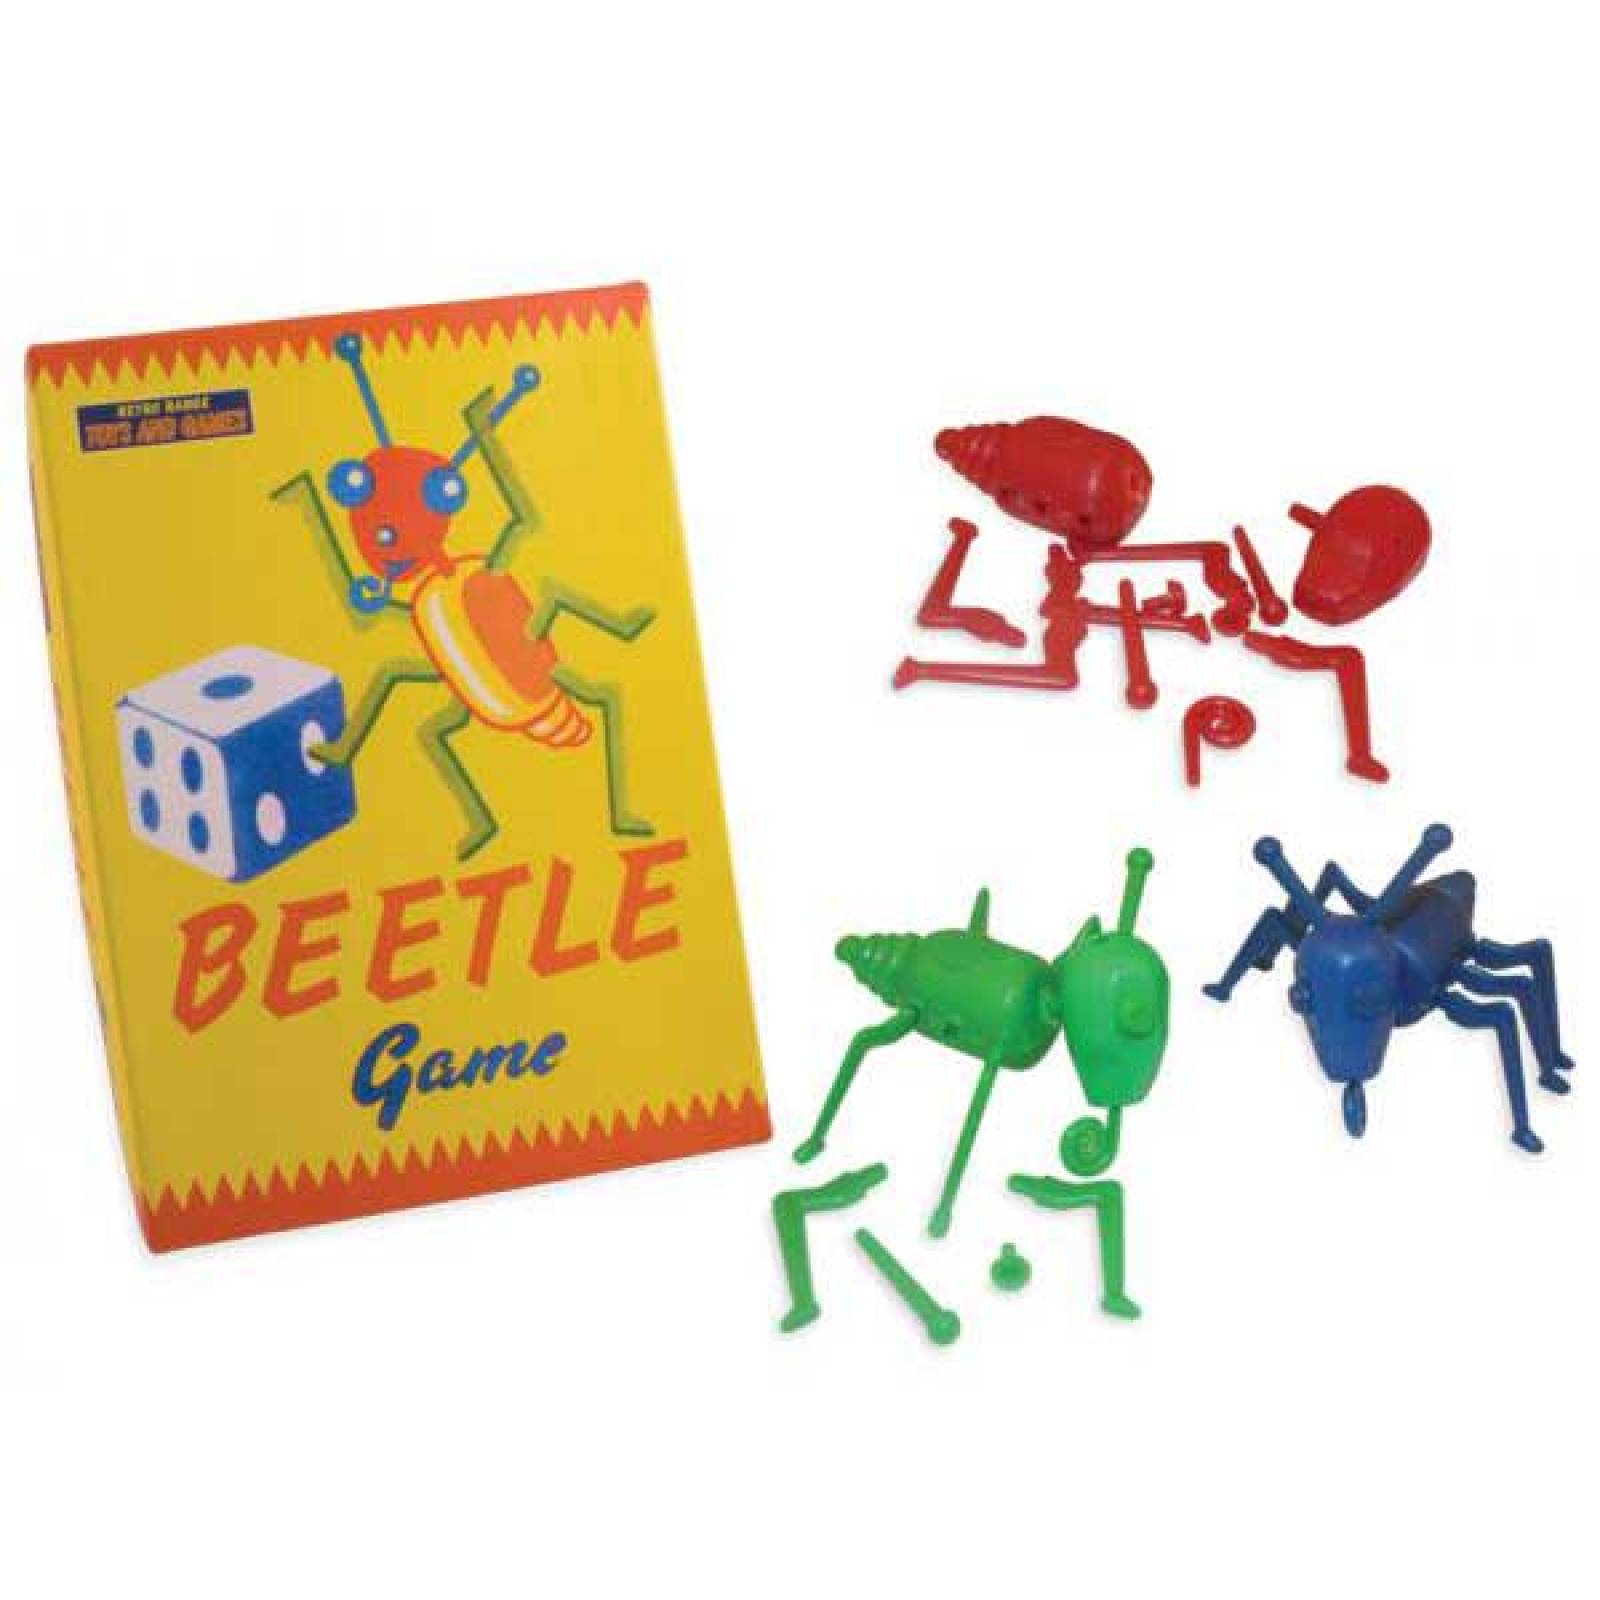 Beetle Game Retro Classic Game